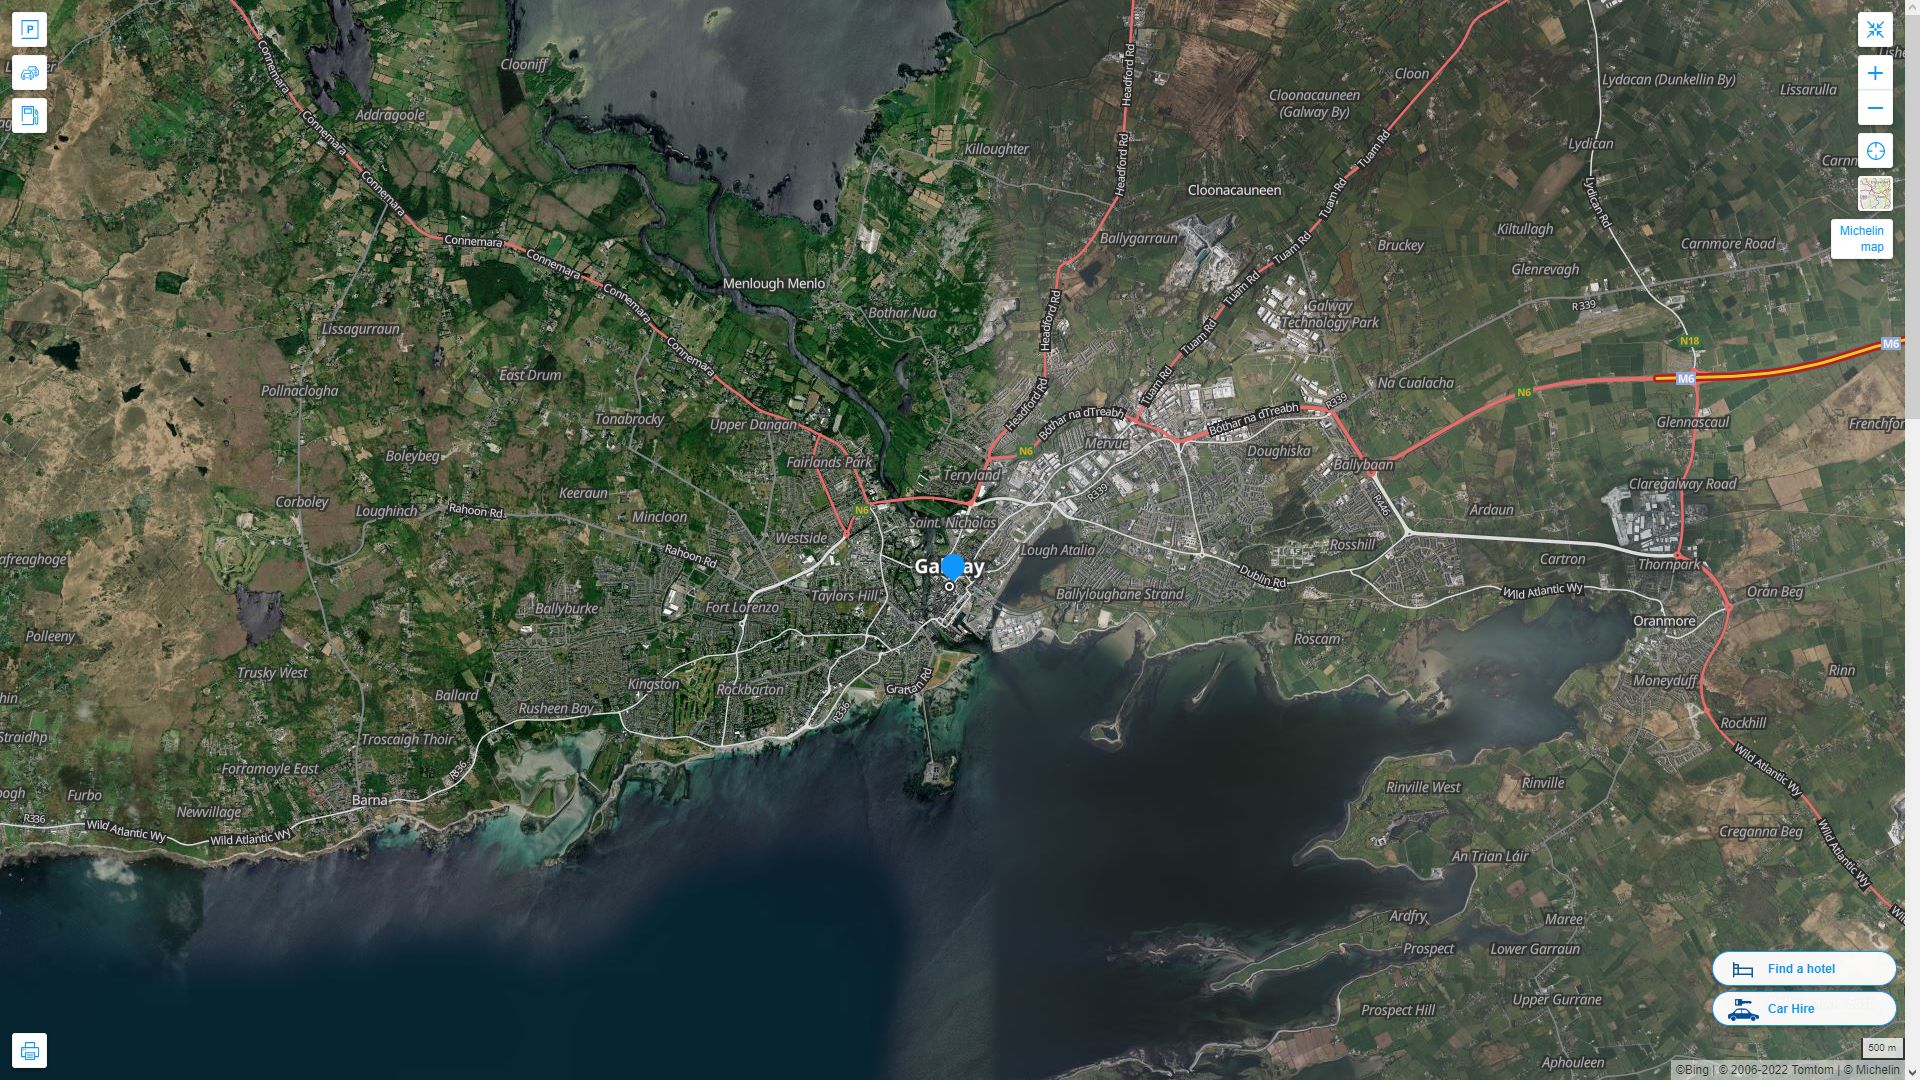 Galway Irlande Autoroute et carte routiere avec vue satellite